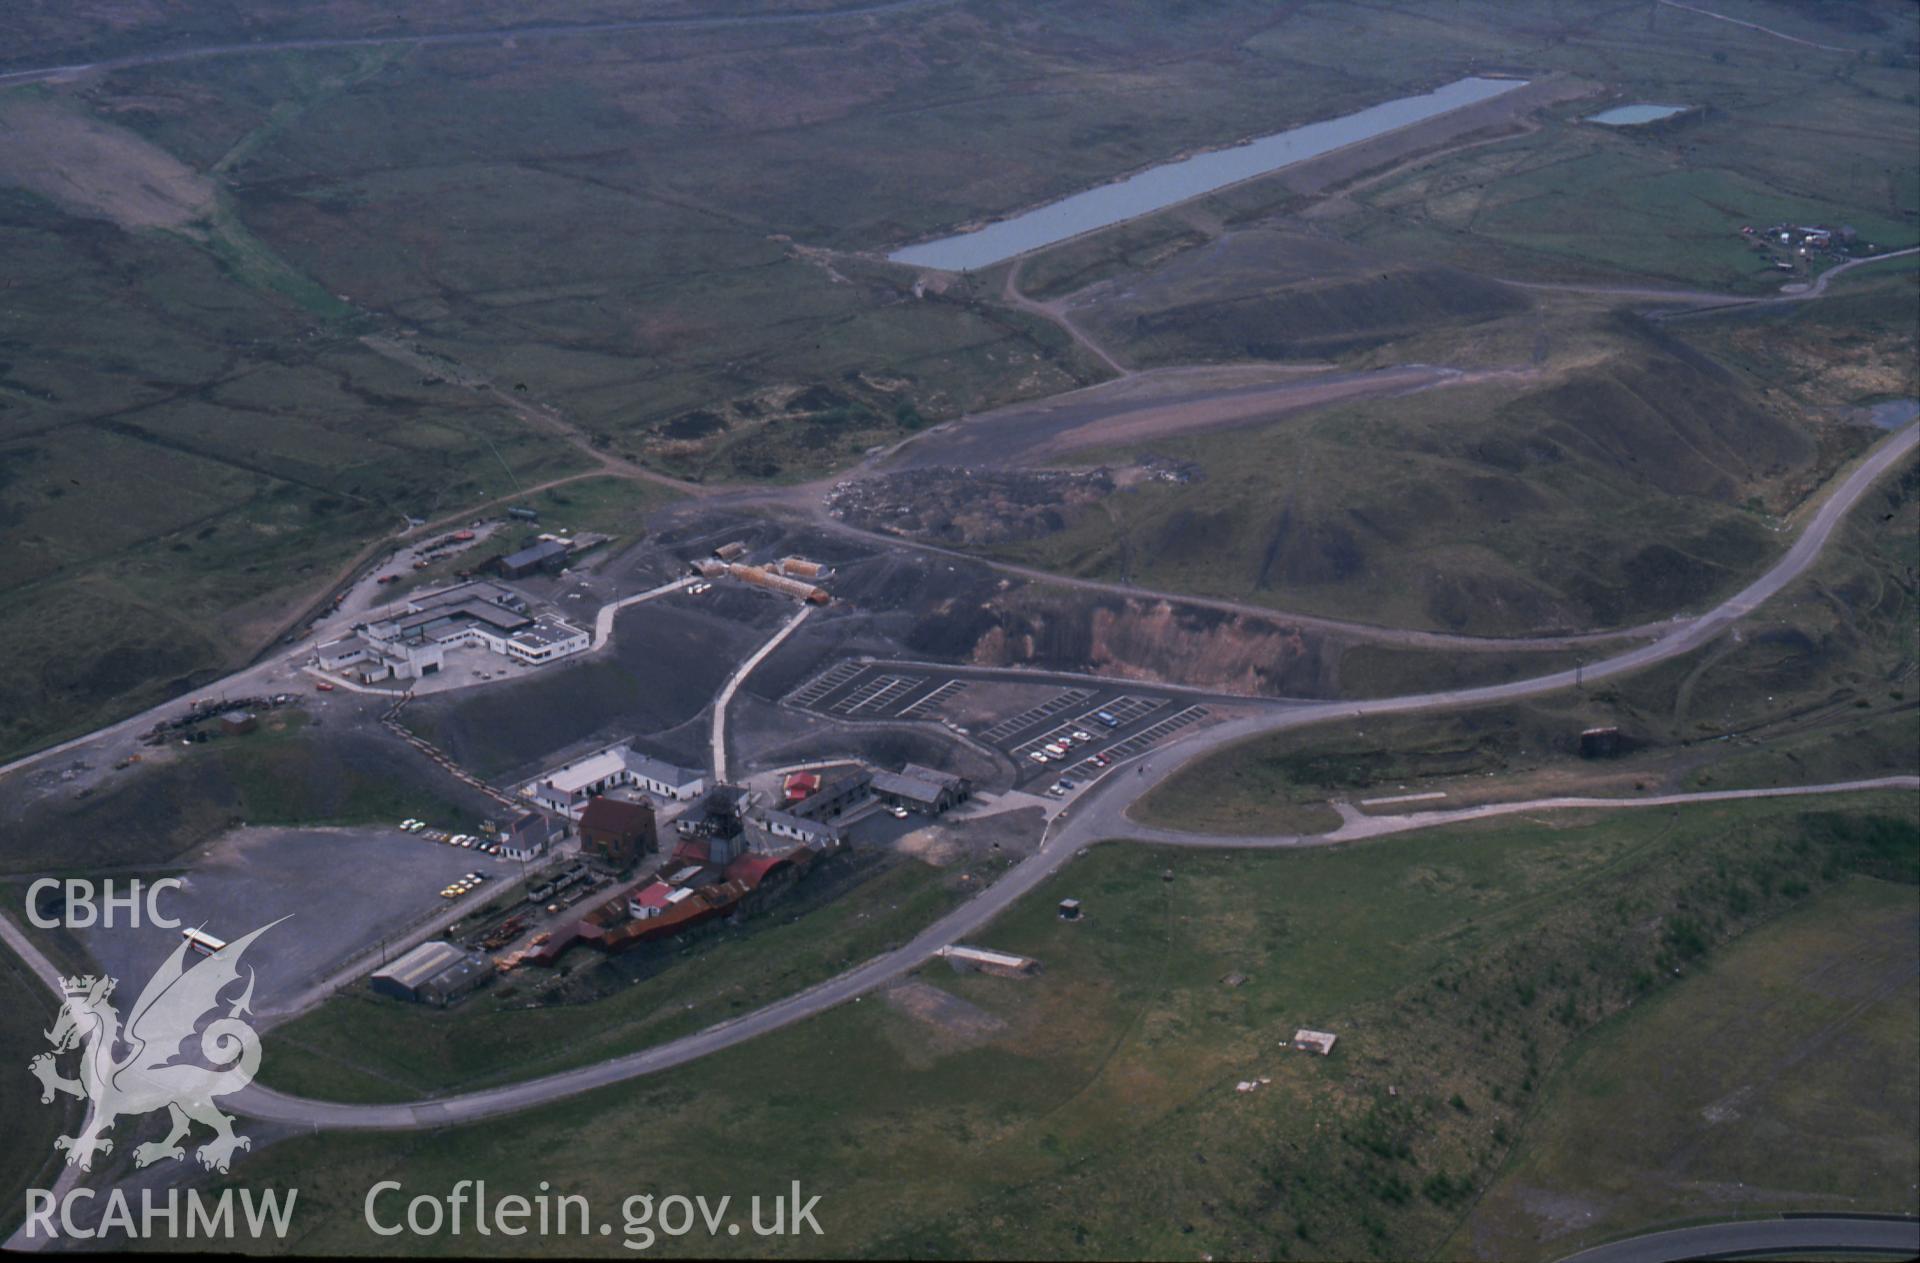 Slide of RCAHMW colour oblique aerial photograph of Big Pit Coal Mine, Blaenavon, taken by C.R. Musson, 11/5/1990.